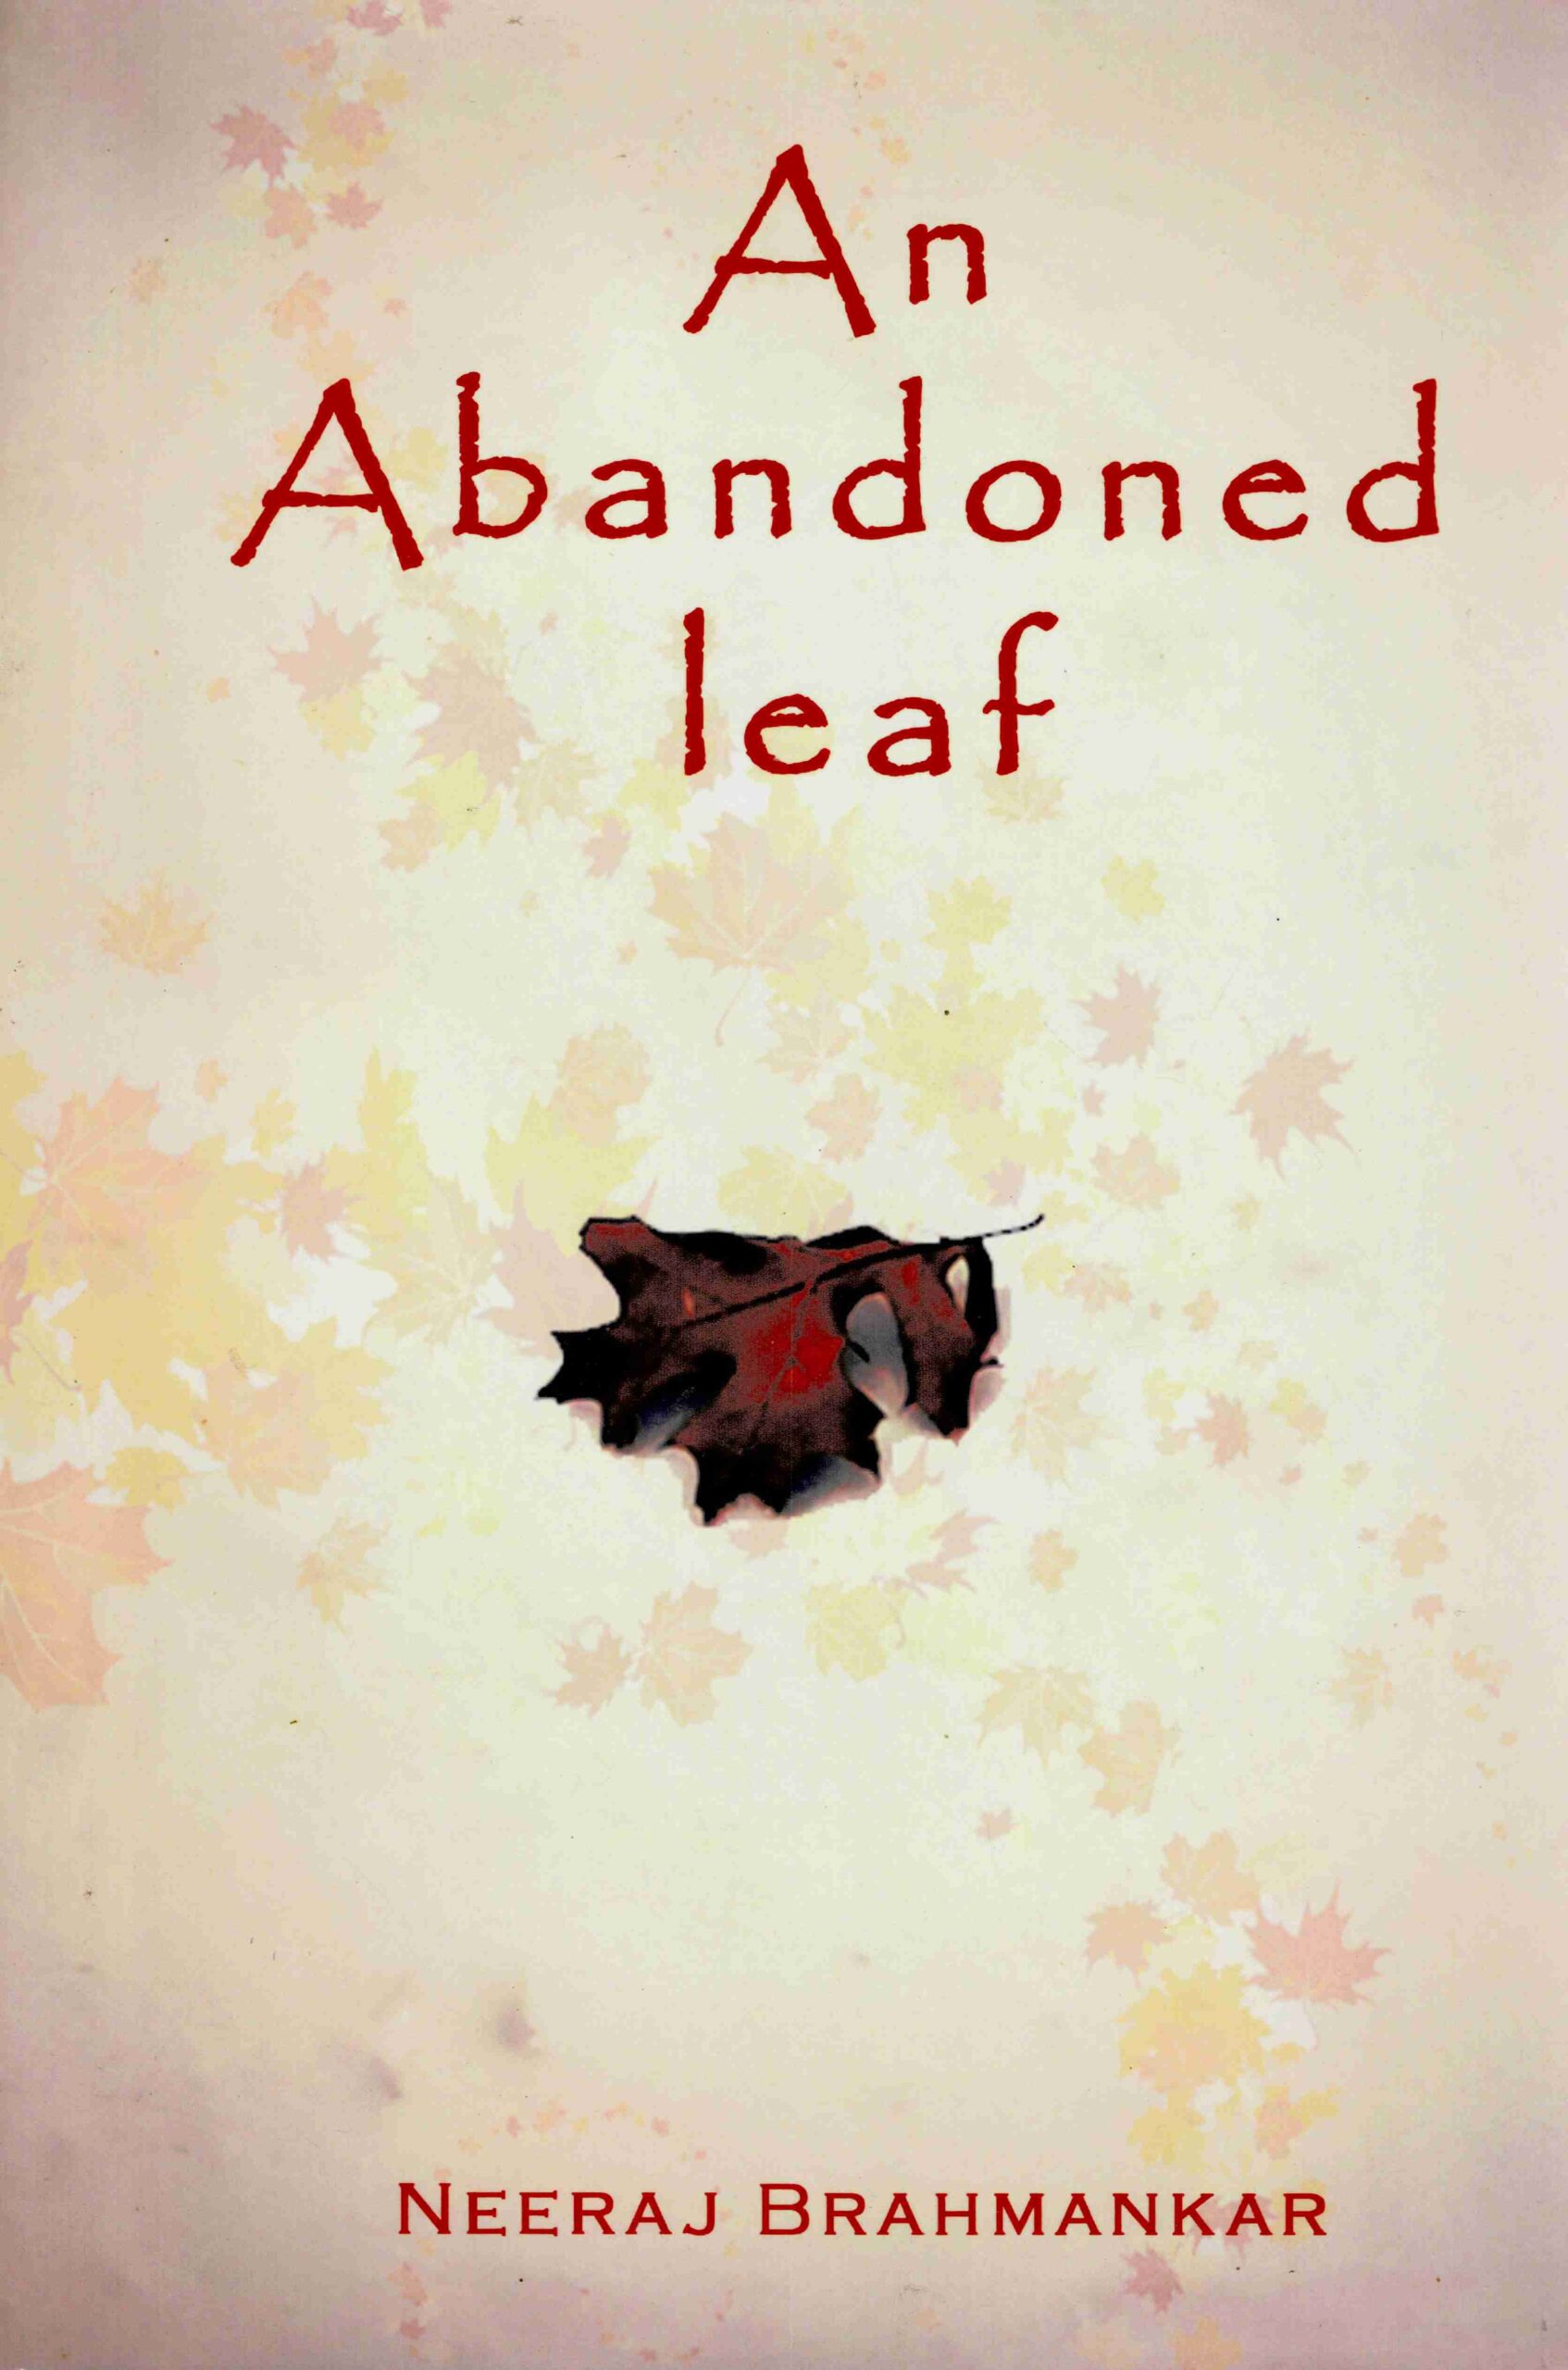 An Abandoned Leaf - book by Neeraj Brahmankar